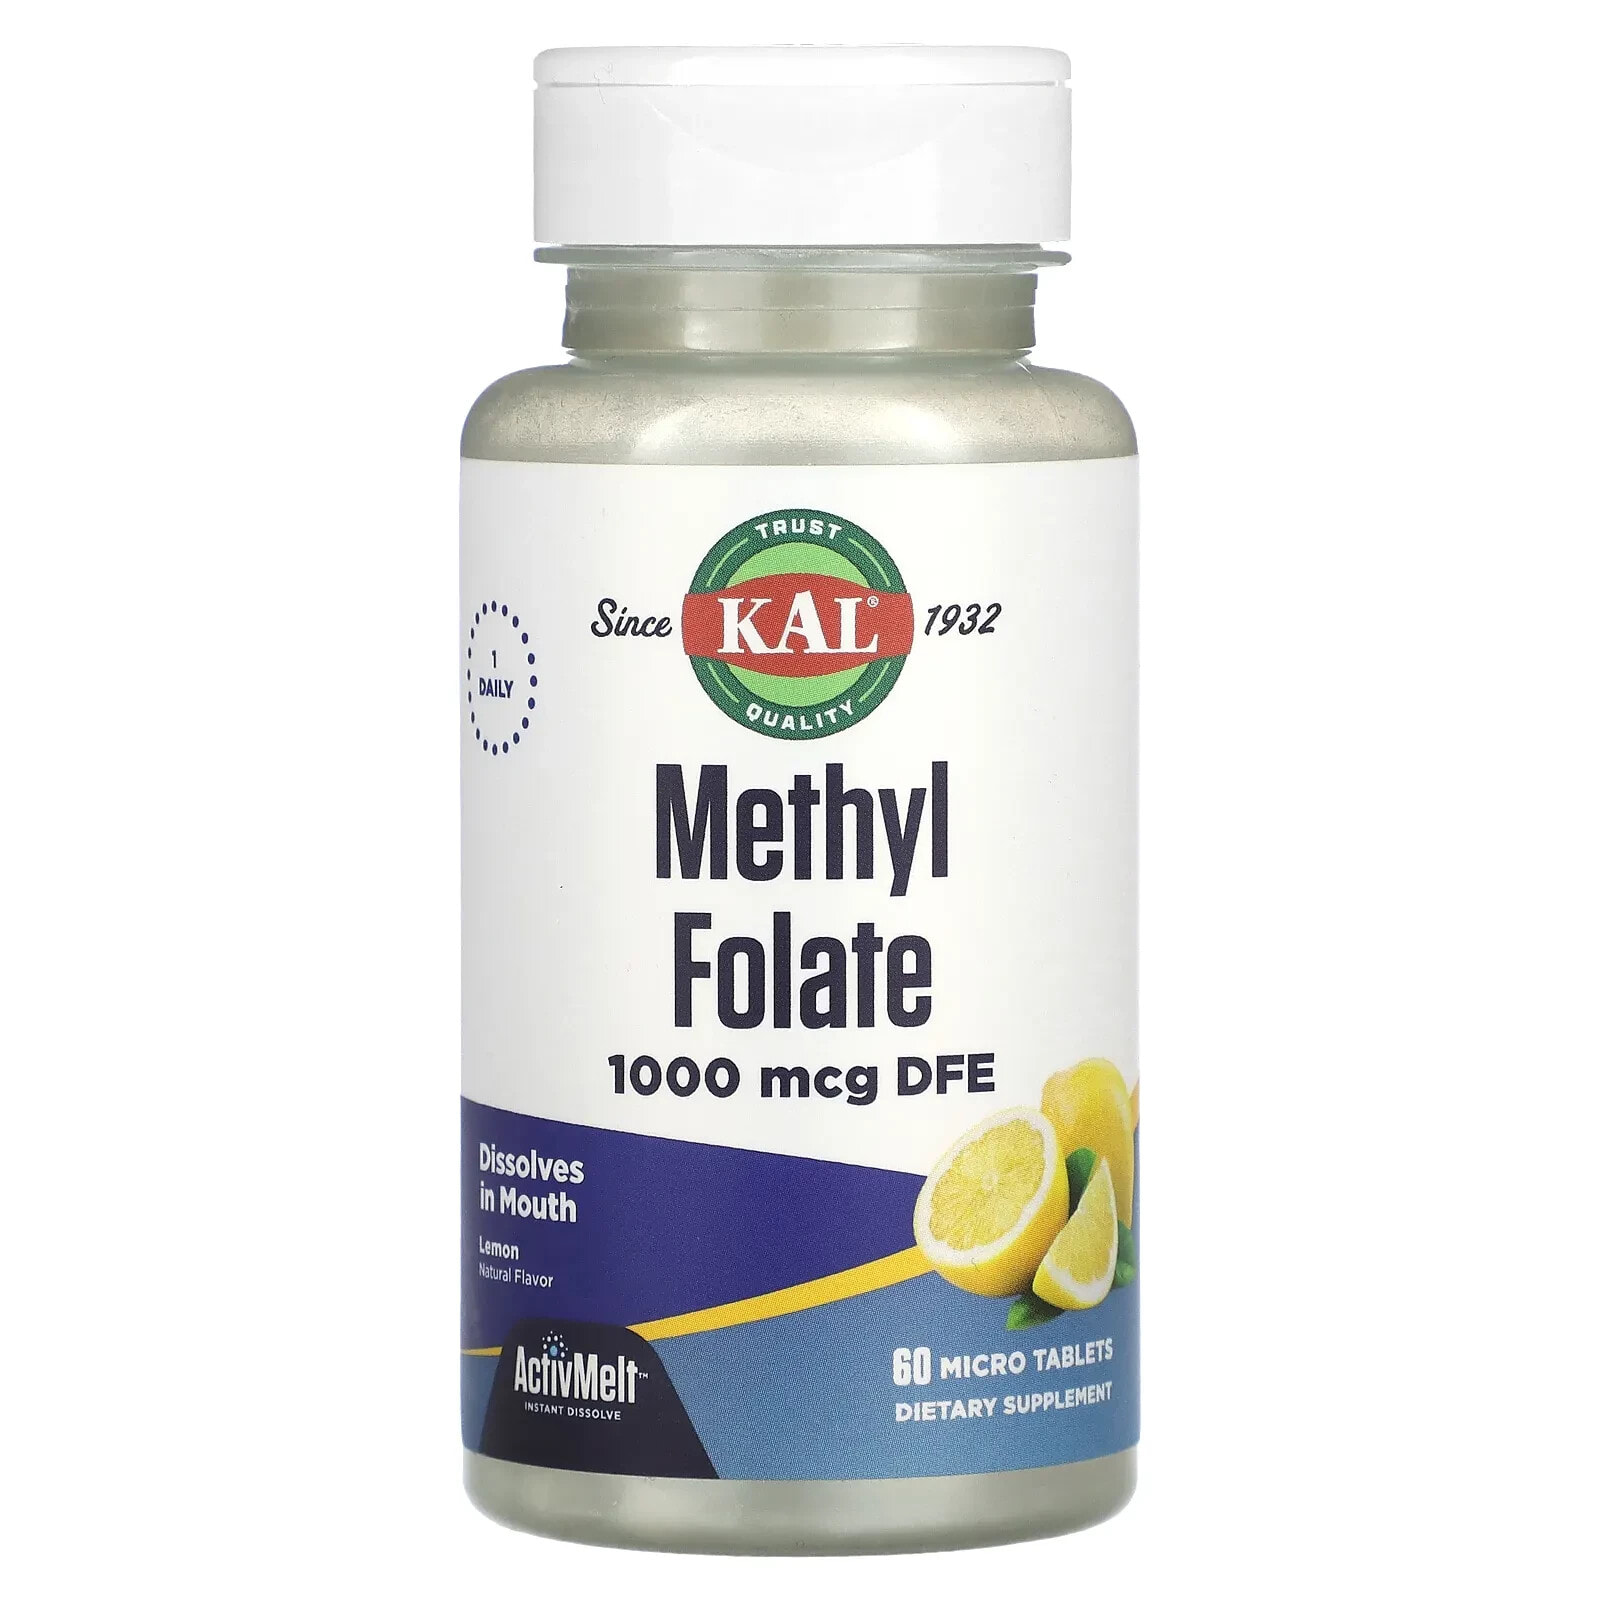 KAL, Methyl Folate, Lemon, 1,000 mcg DFE, 60 Micro Tablets